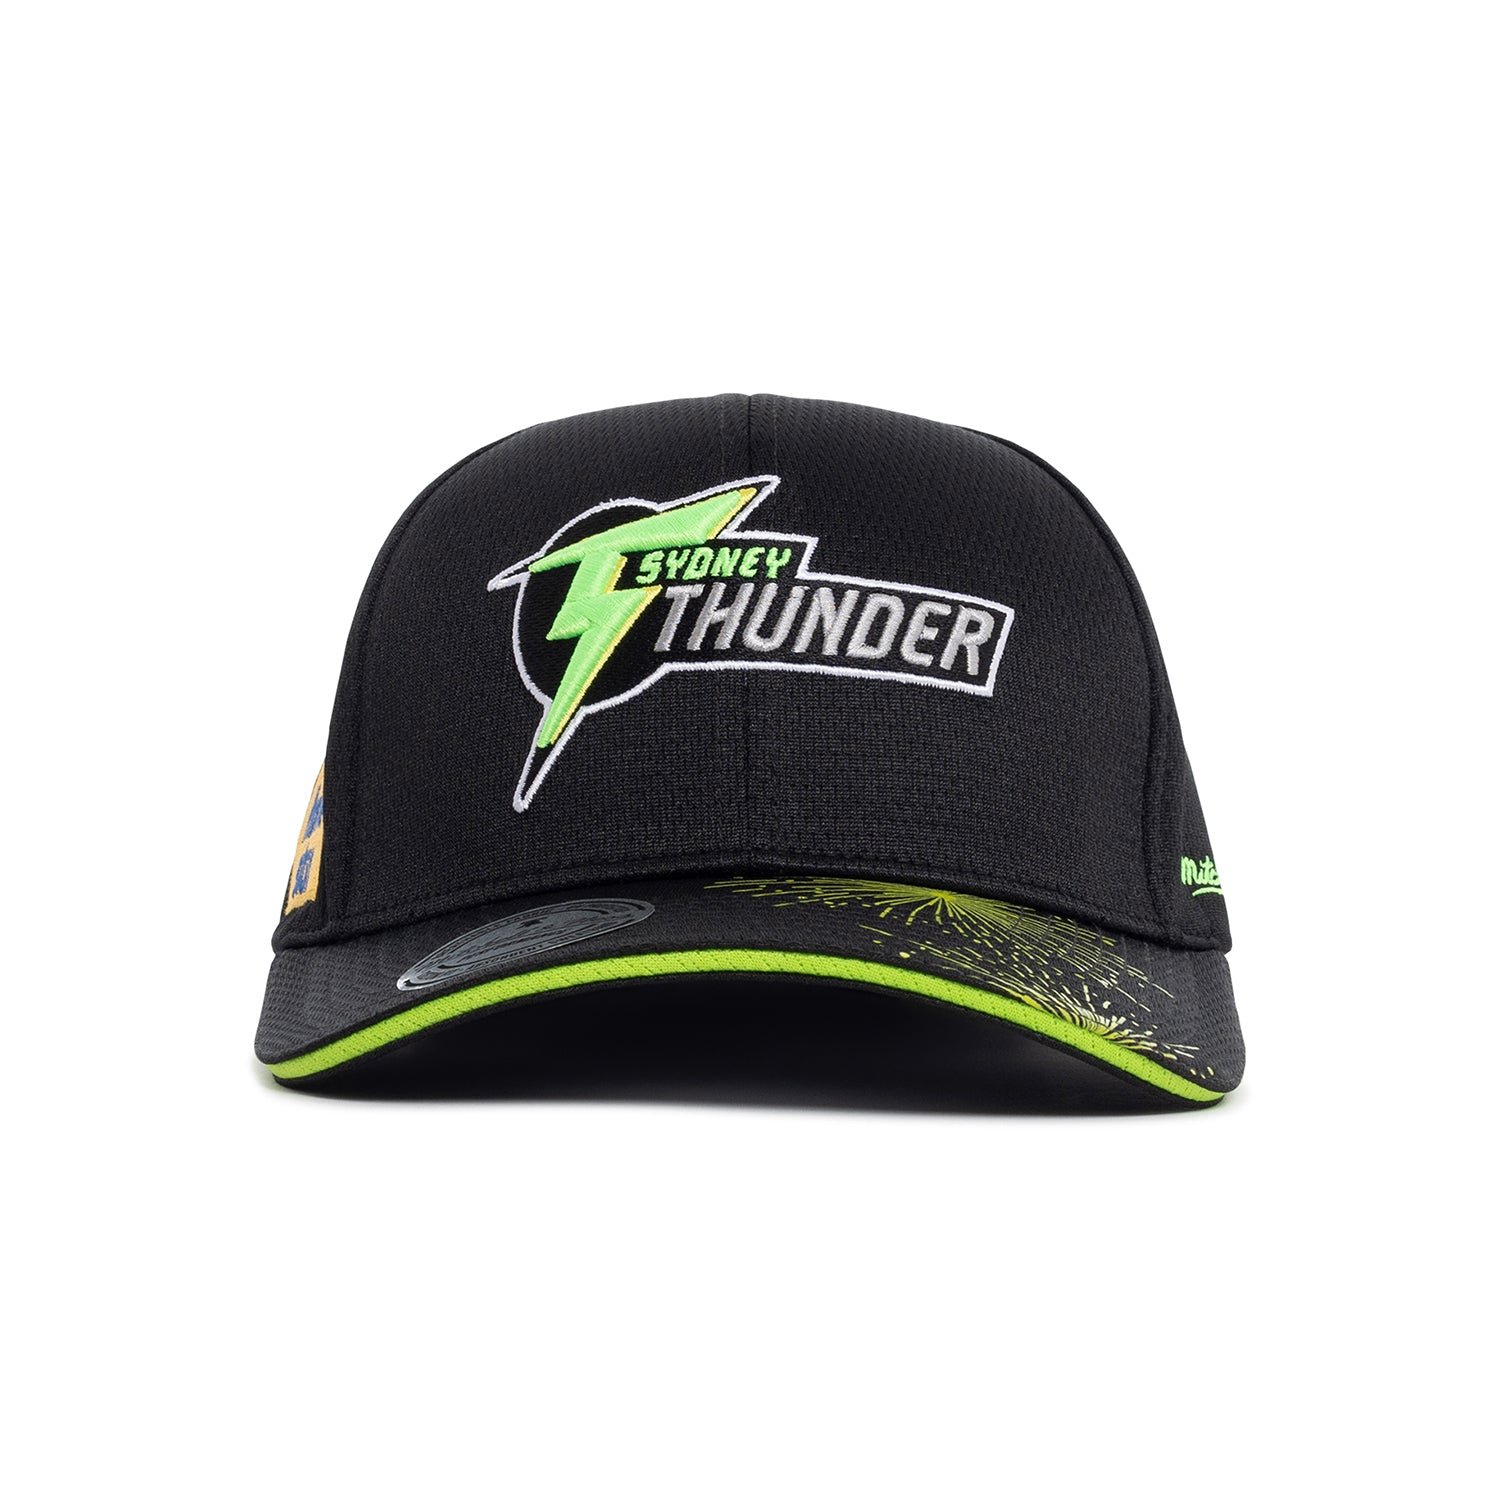 Sydney Thunder WBBL Training Cap